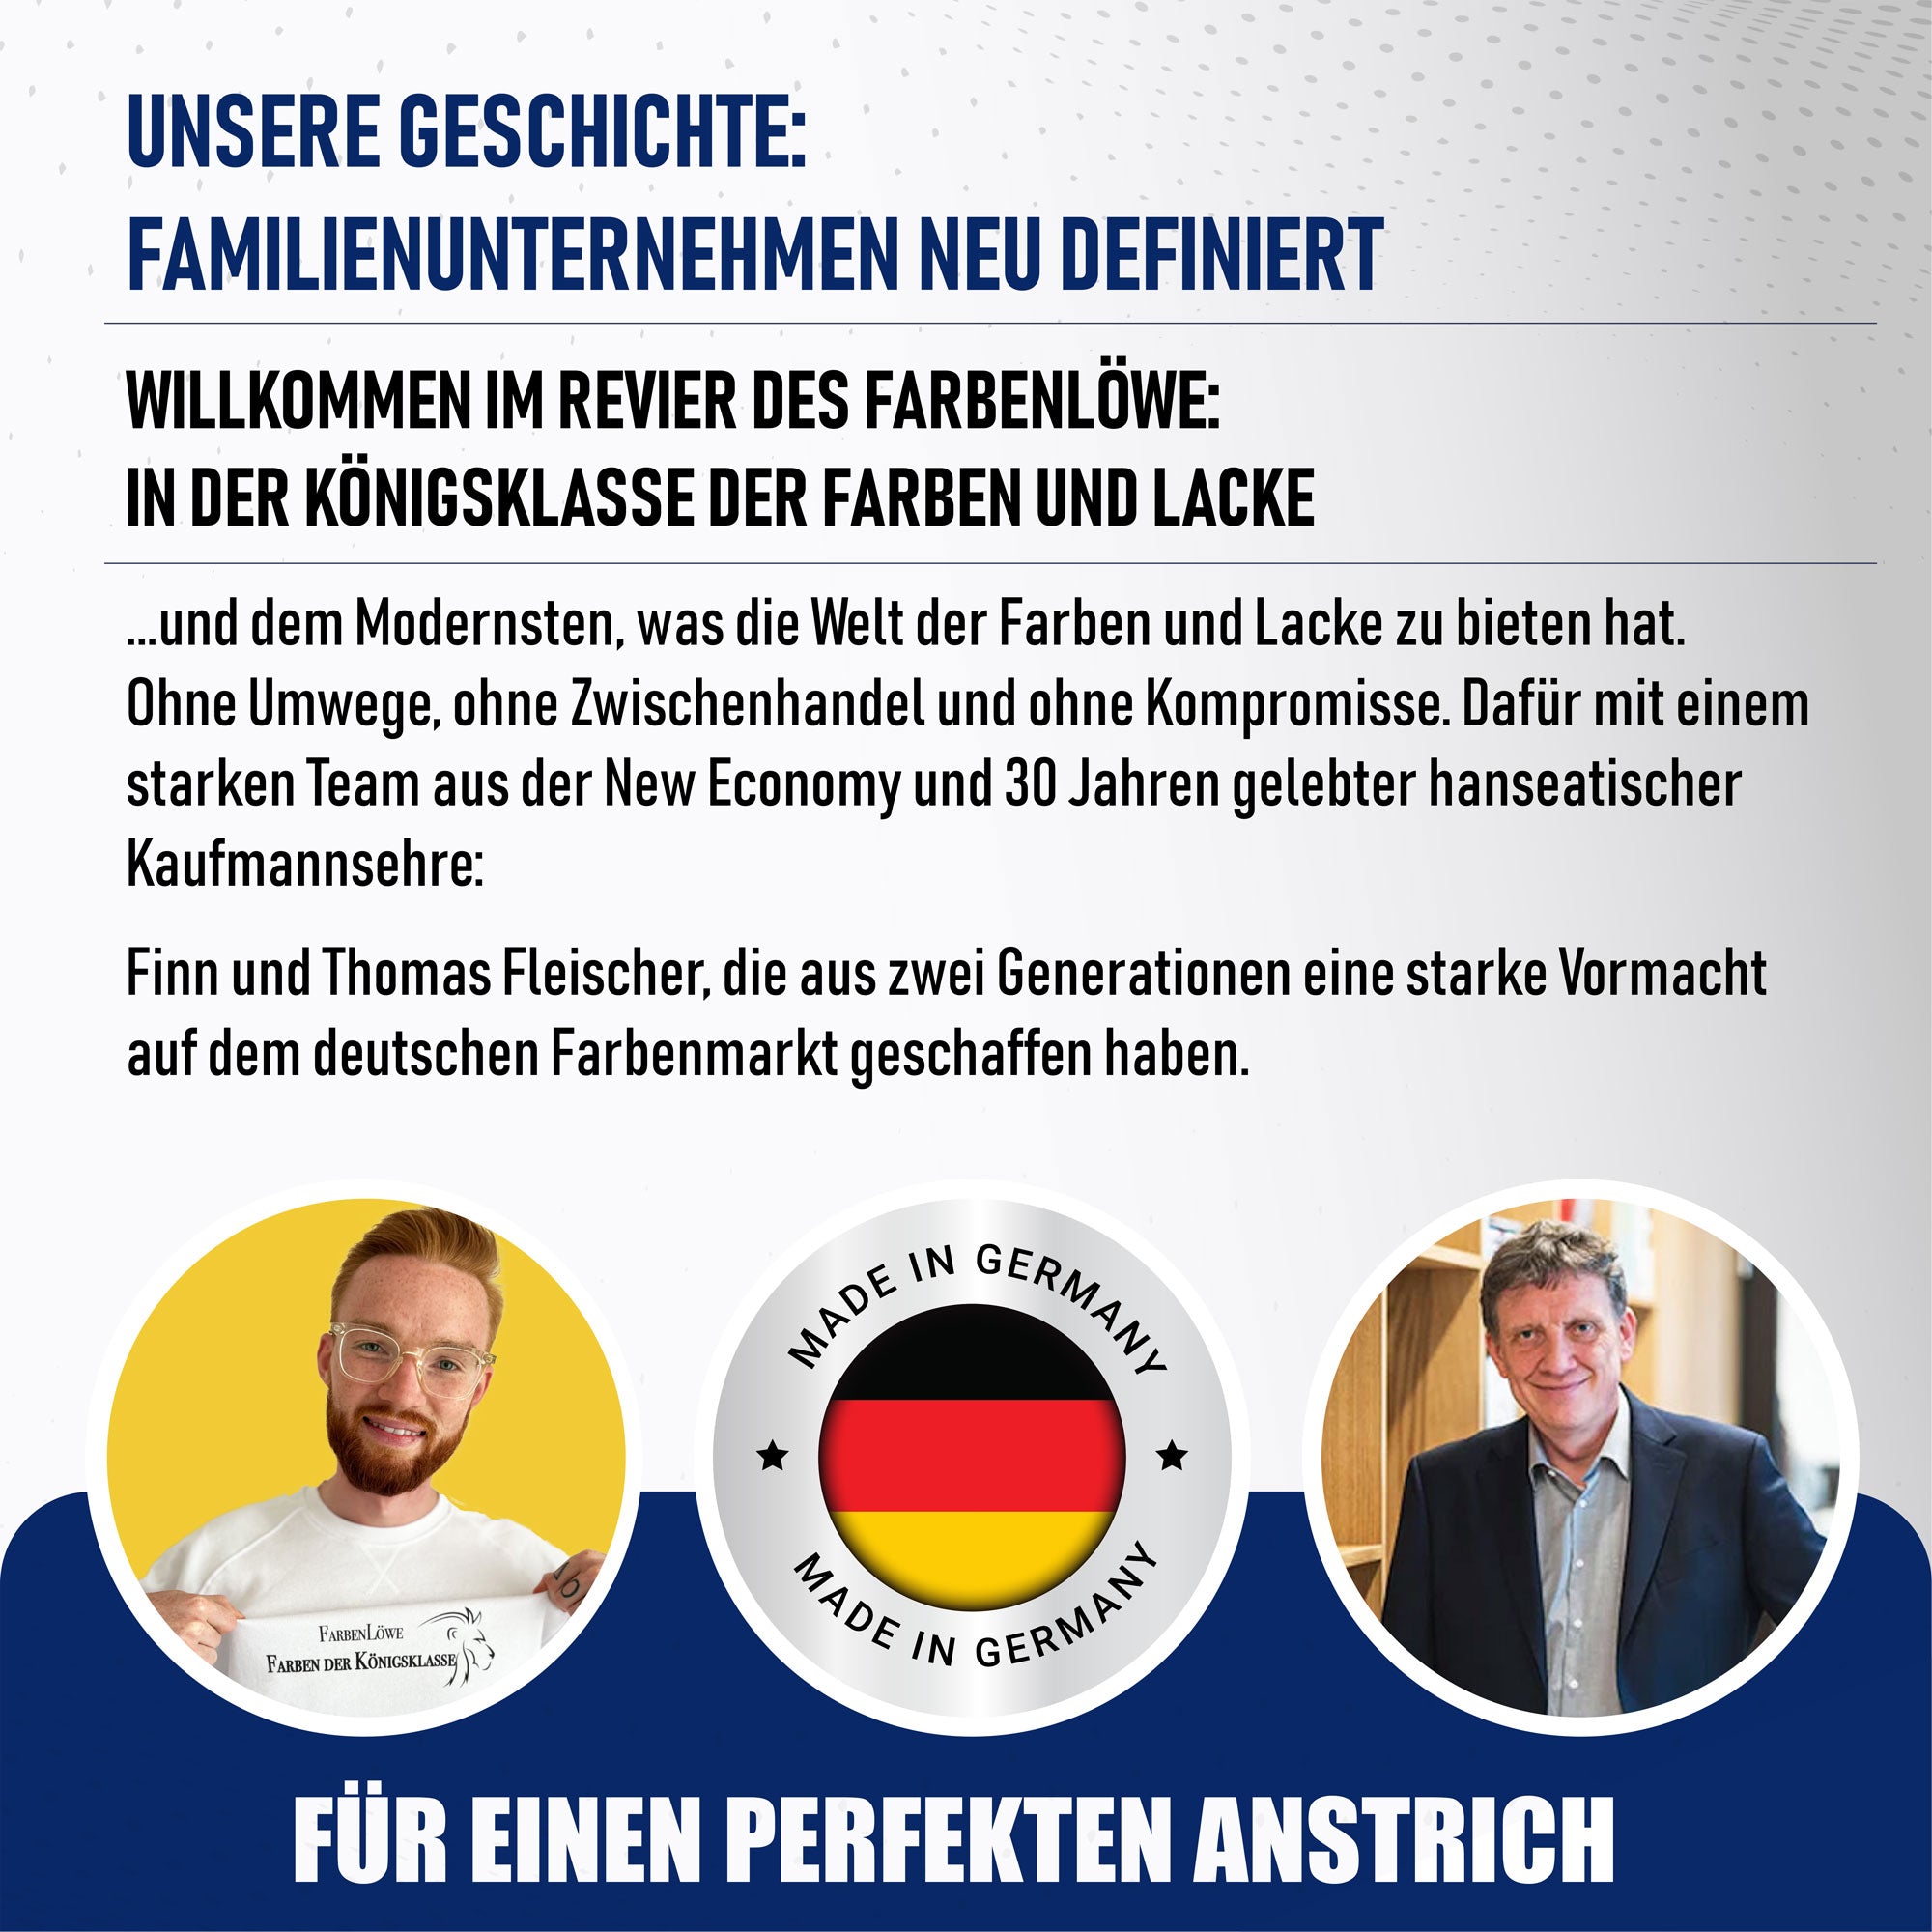 Hamburger Lack-Profi 2K Autolack in Enzianblau RAL 5010 mit Lackierset (X300) & Verdünnung (1 L) - 30% Sparangebot